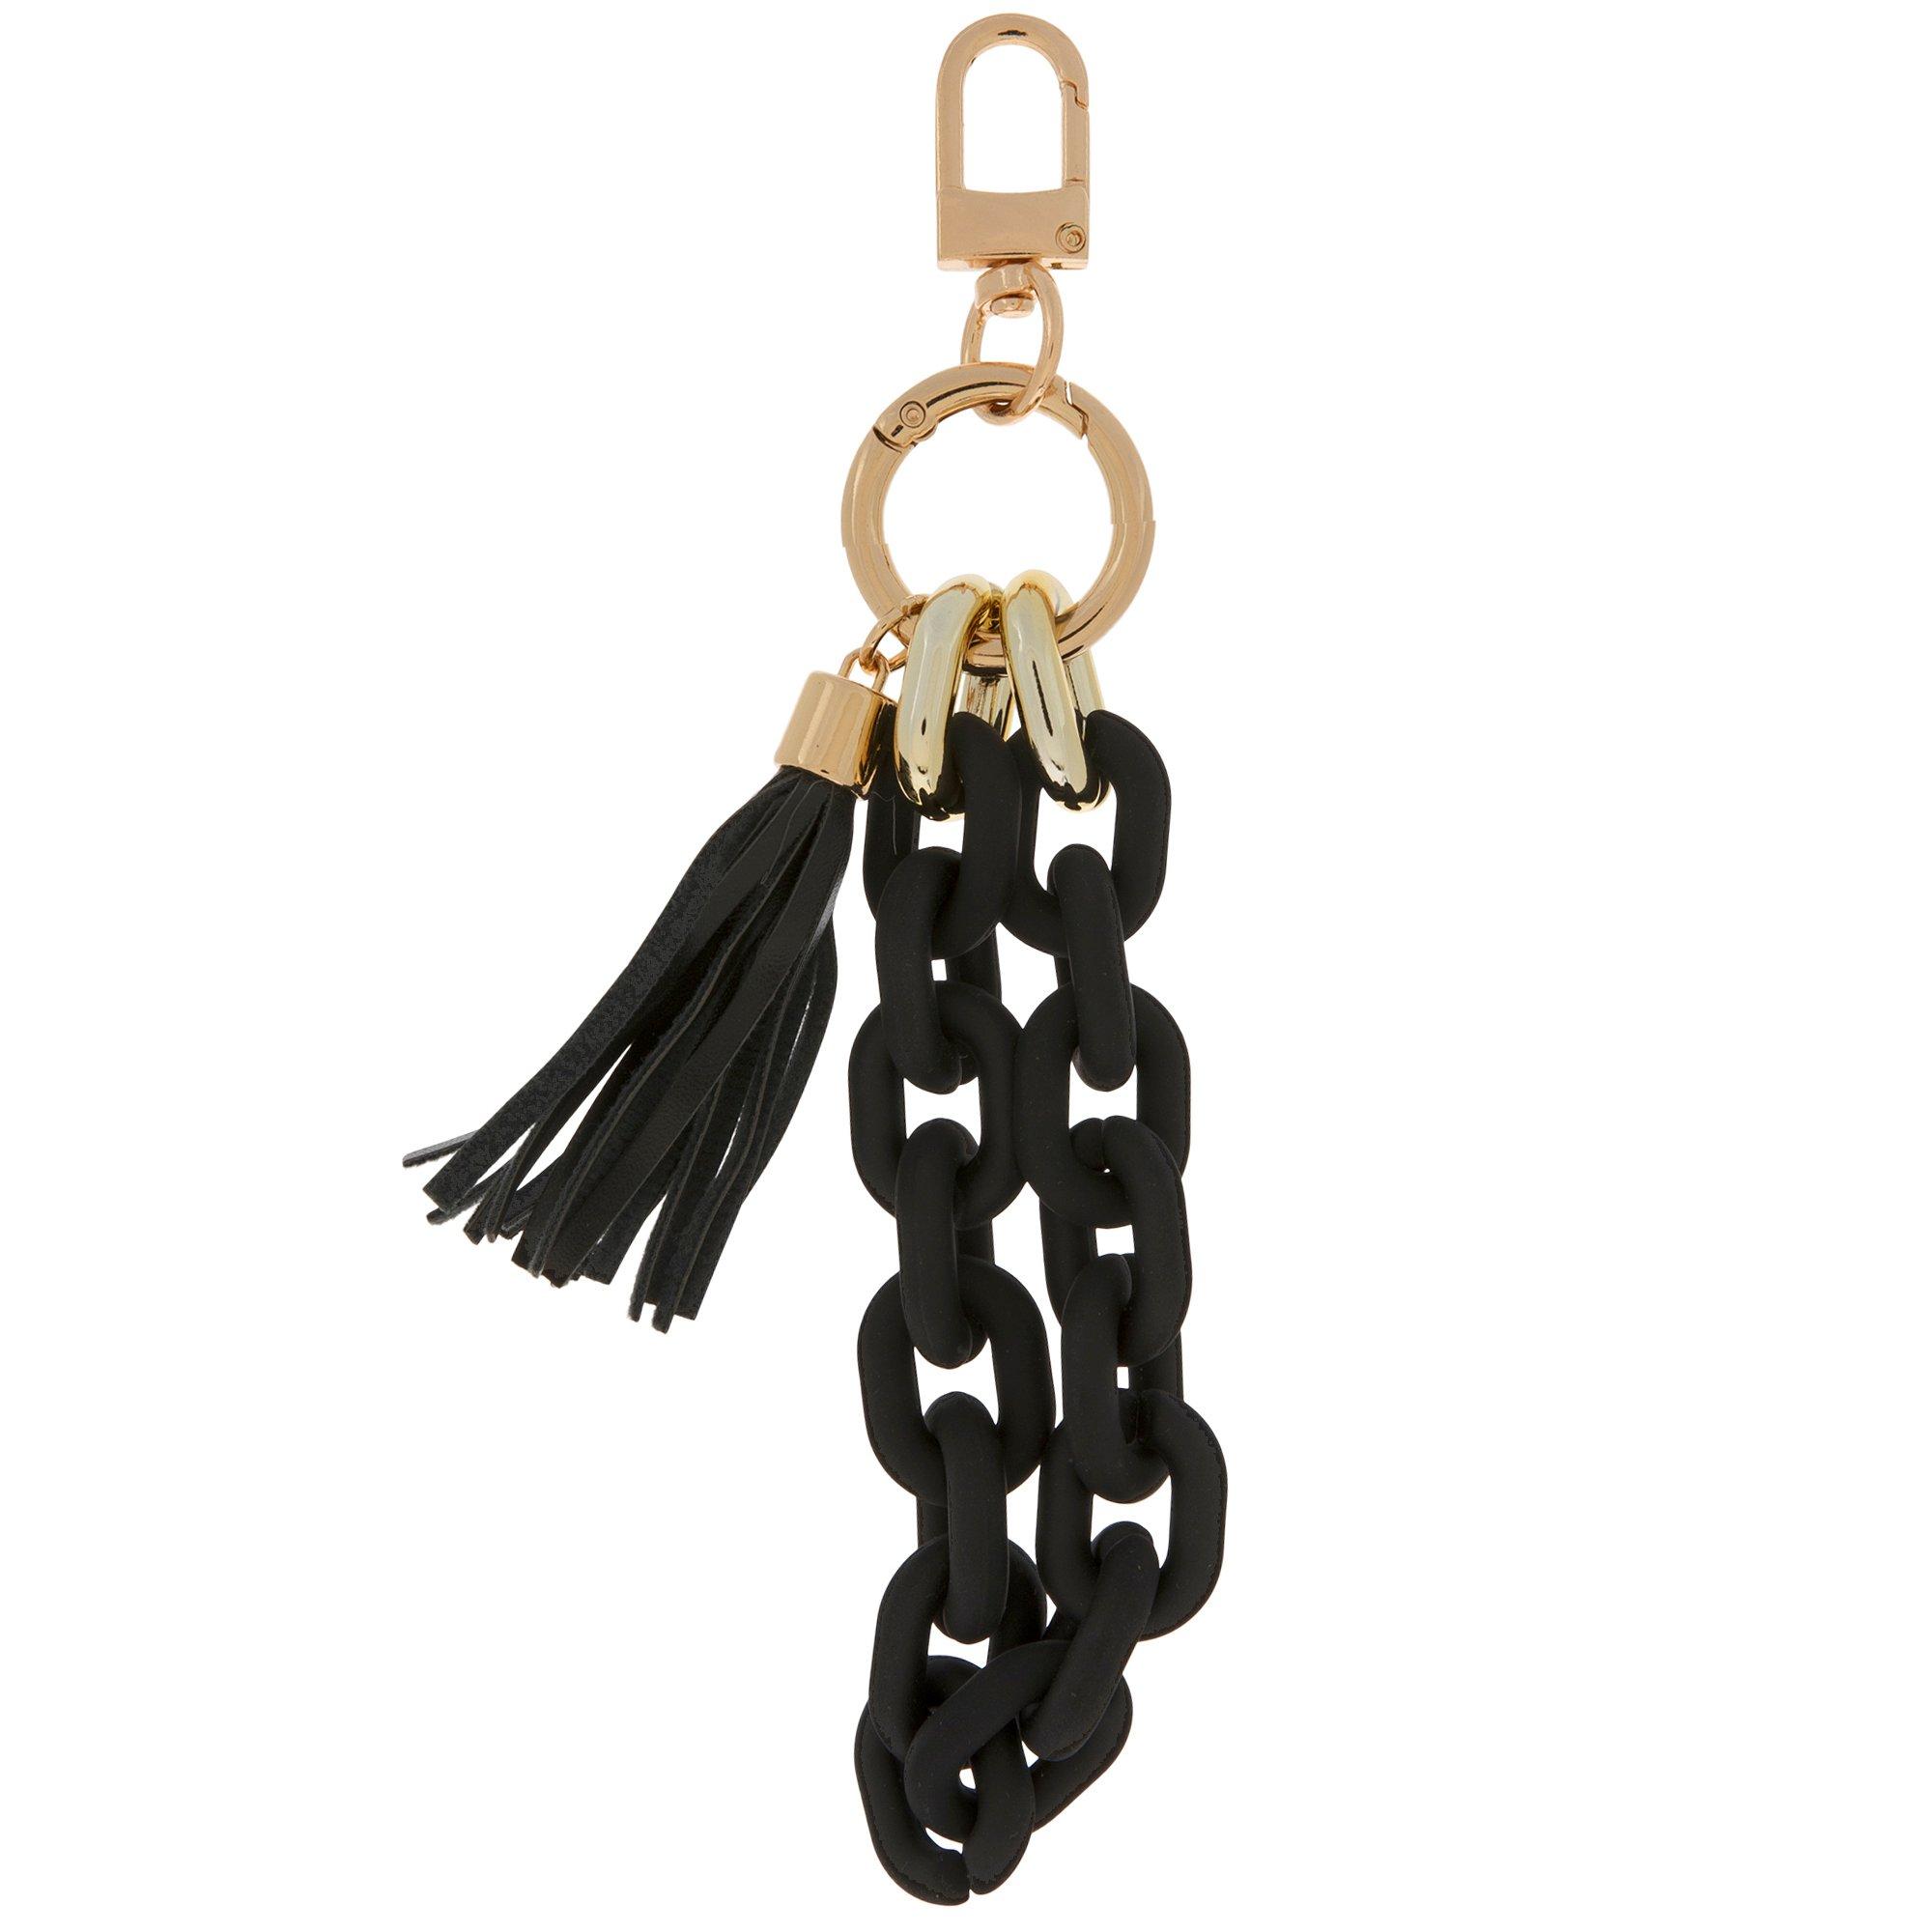 Naierhg Key Chain Tassels Compact Long Lasting Key Ring Bag Decoration